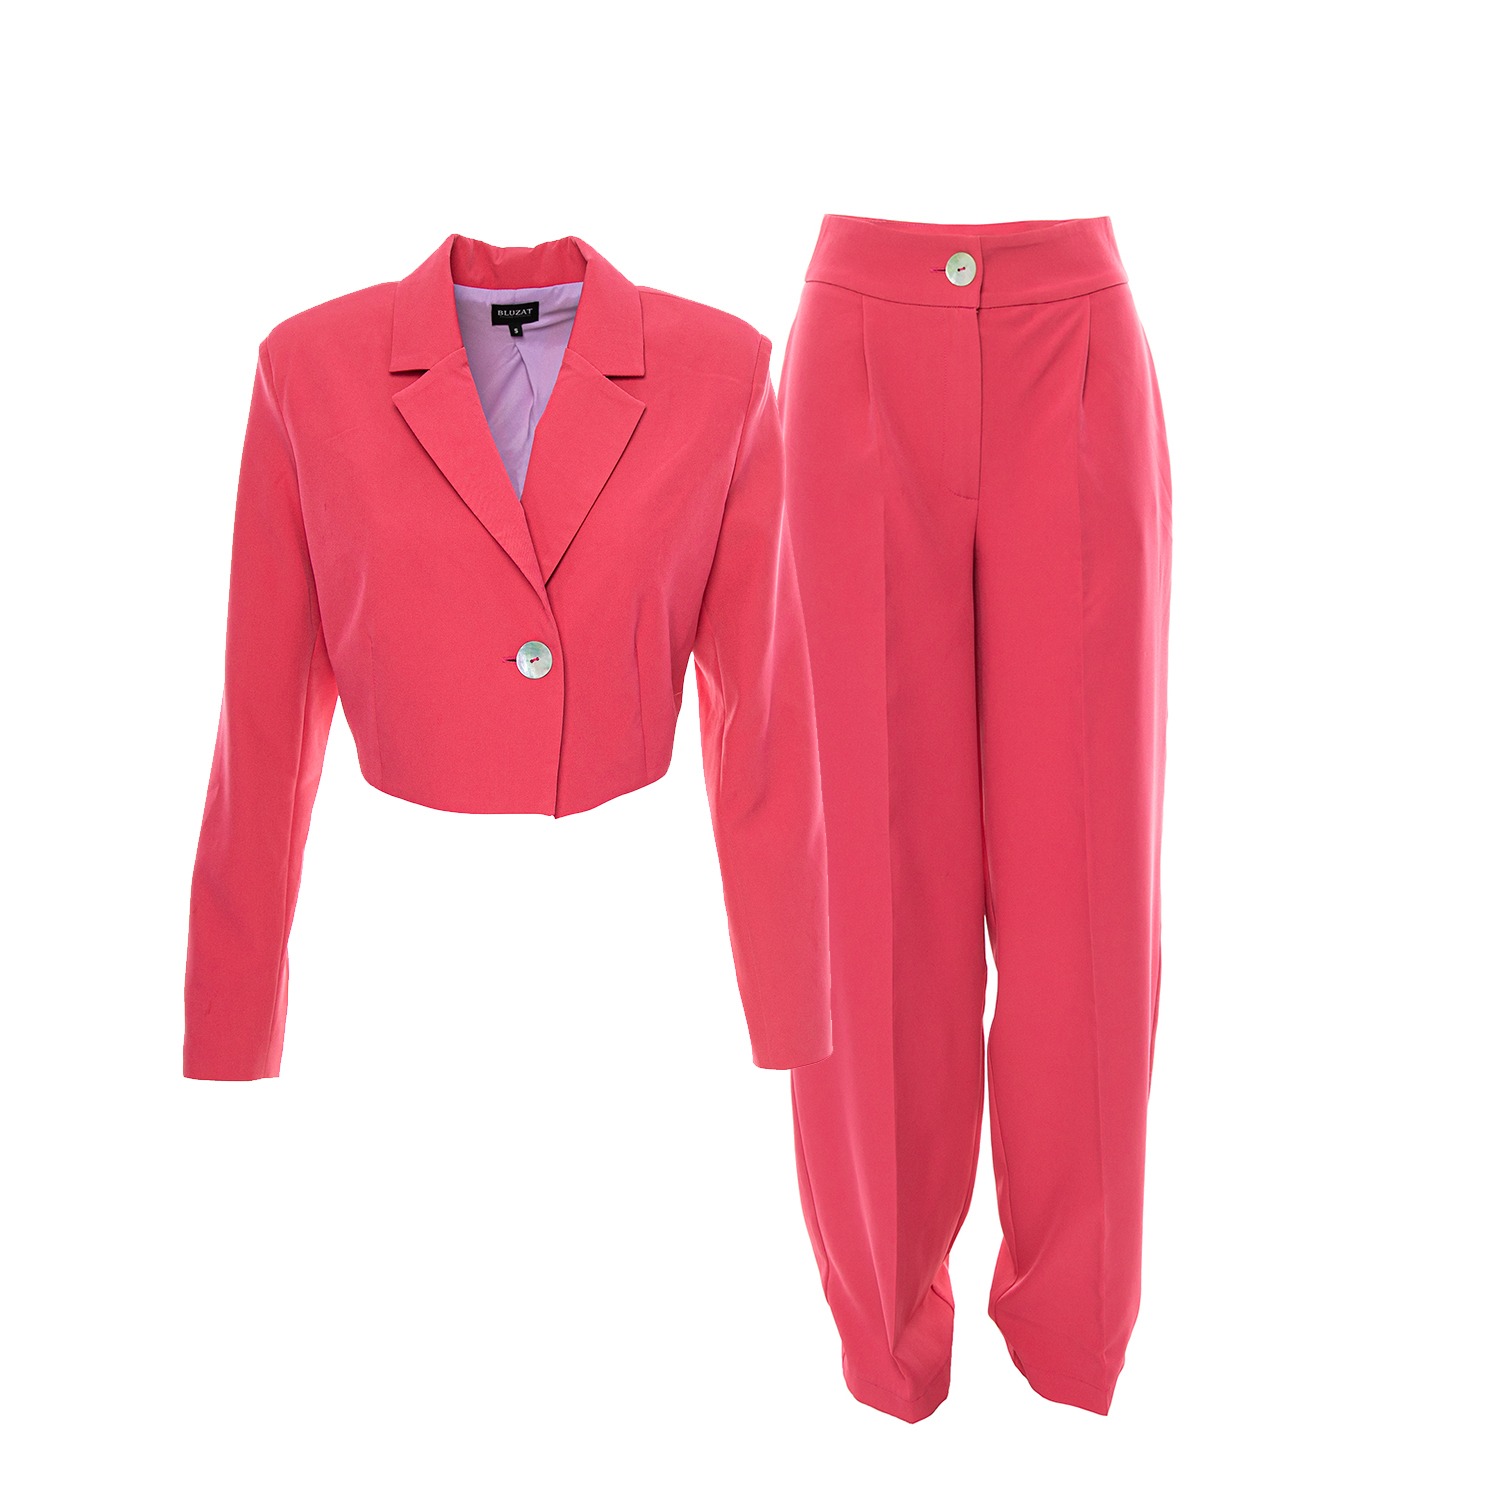 Panache Apparel & Accessories - New HOT PINK Liverpool suit 🩷 Blazer $129  S-XL Pants $109 0-16